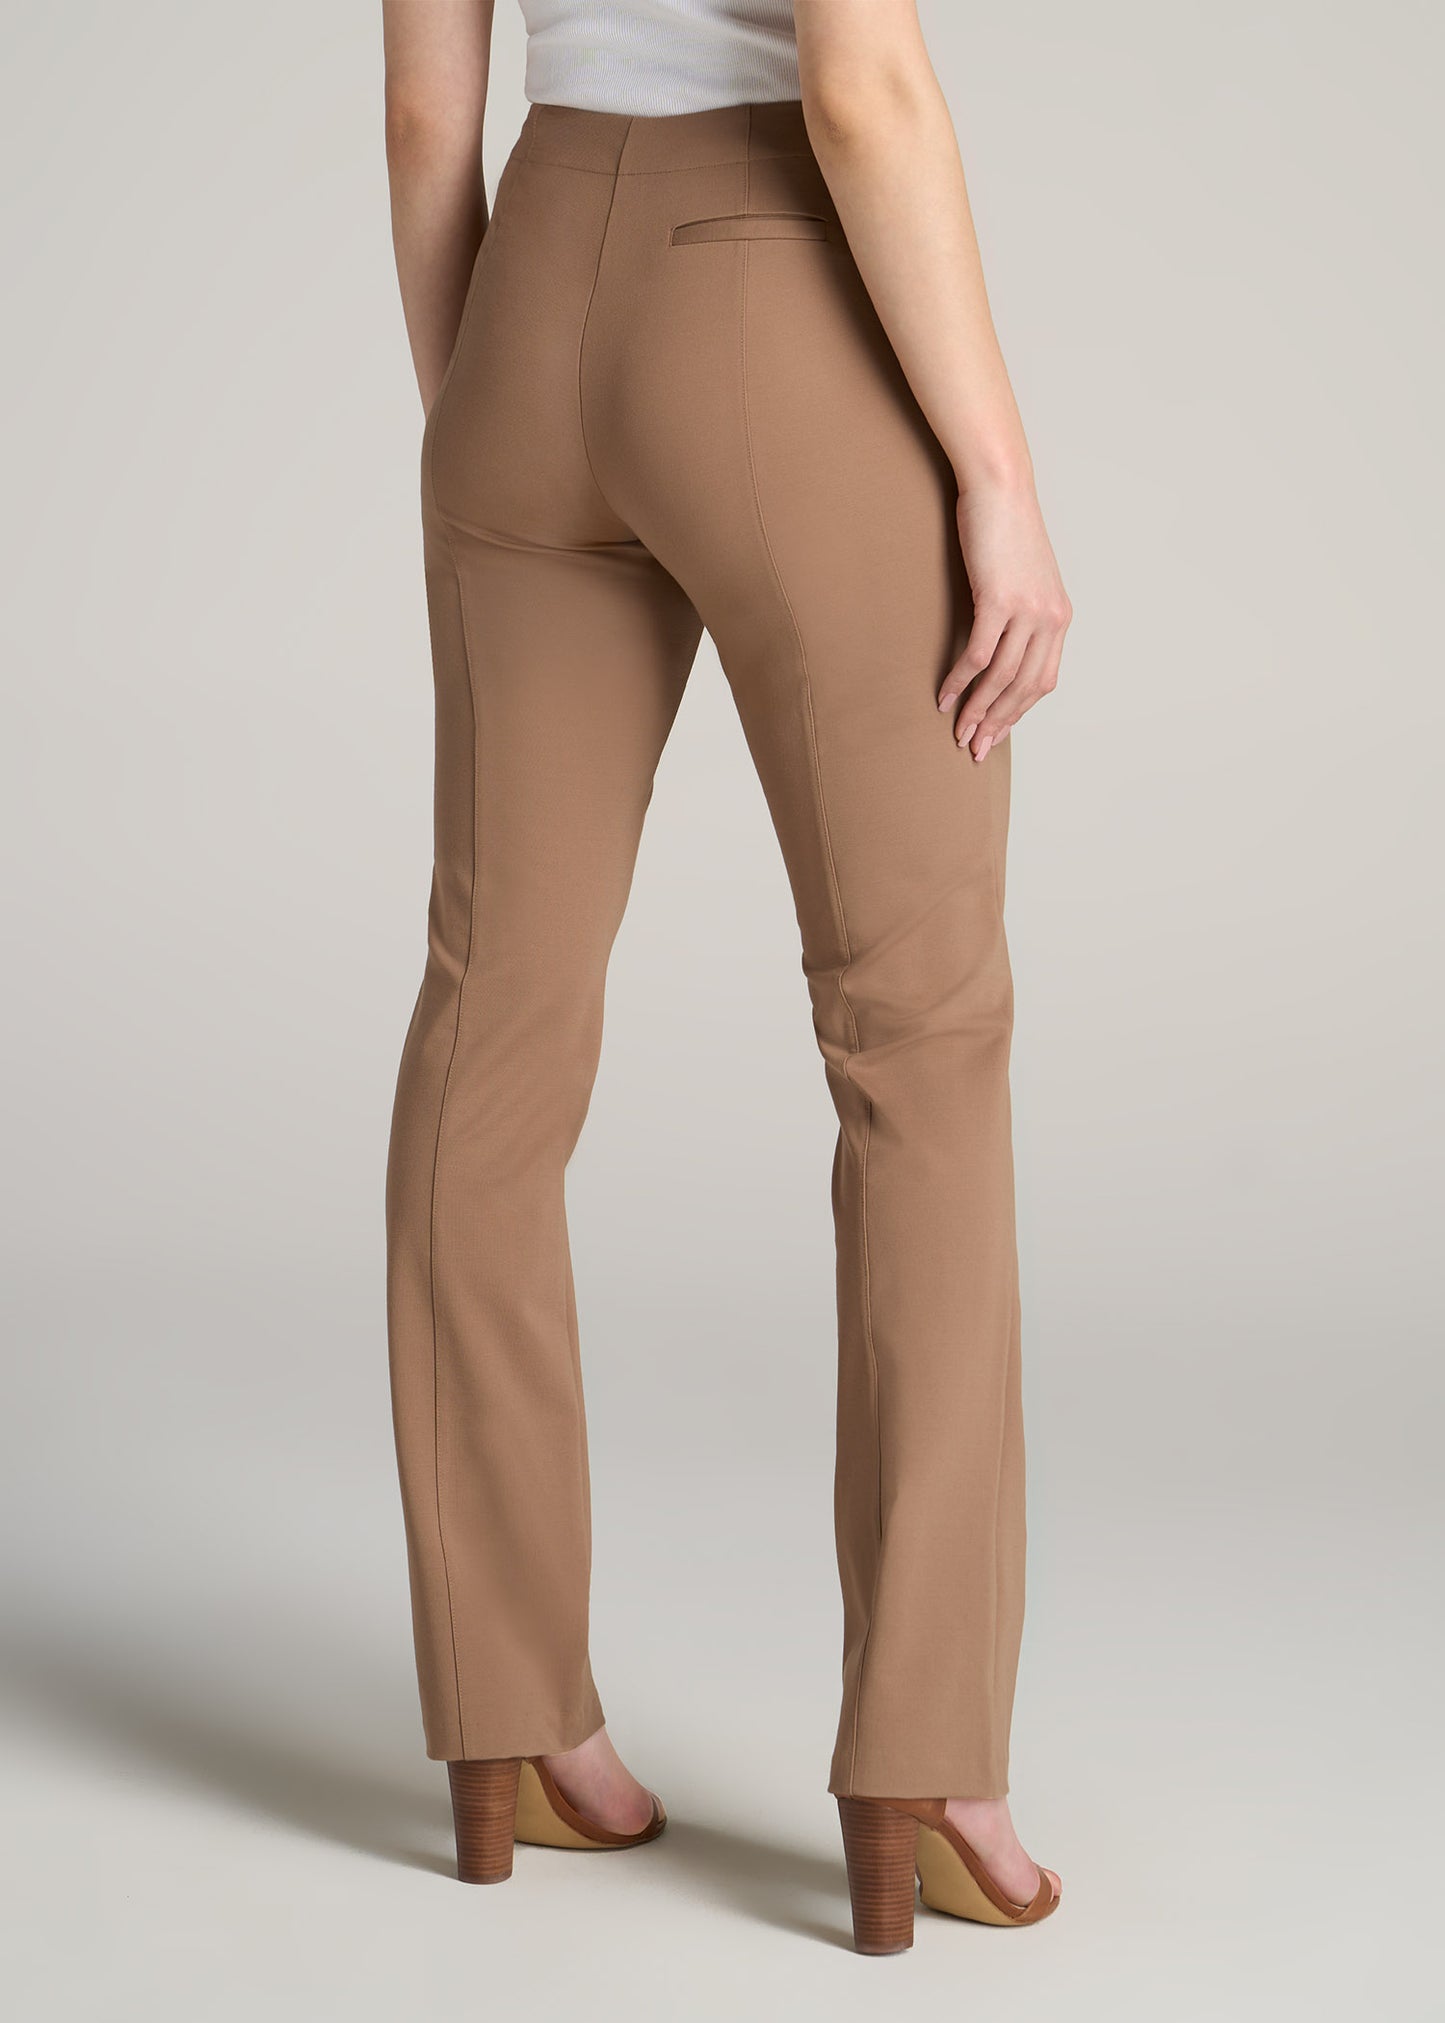 G H Bass Dress Pants Womens 16 Brown Stretch High Rise Straight Pockets  Career | eBay